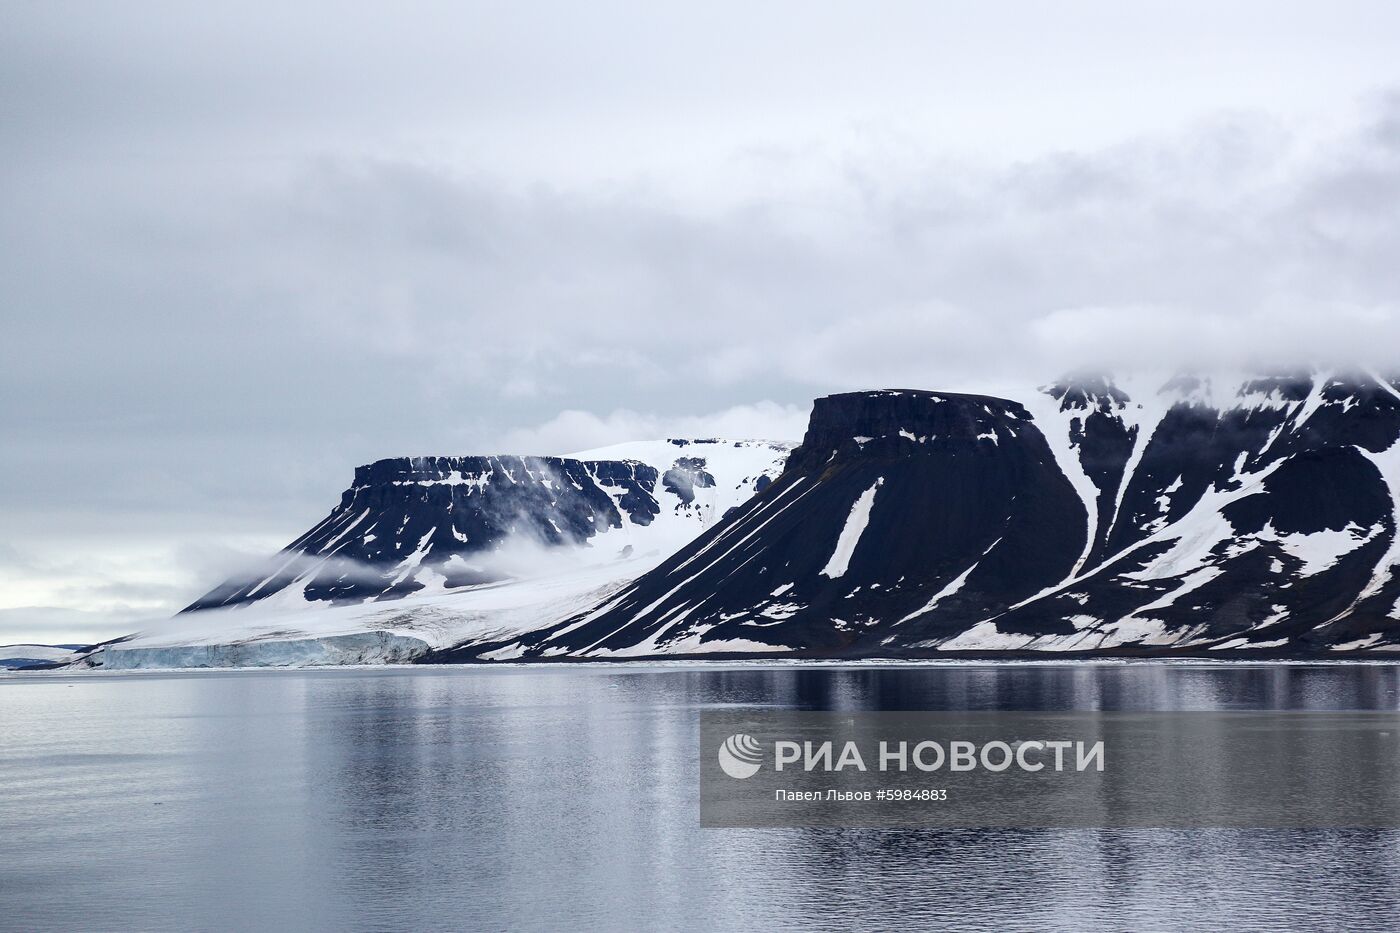 Арктический архипелаг Земля Франца-Иосифа